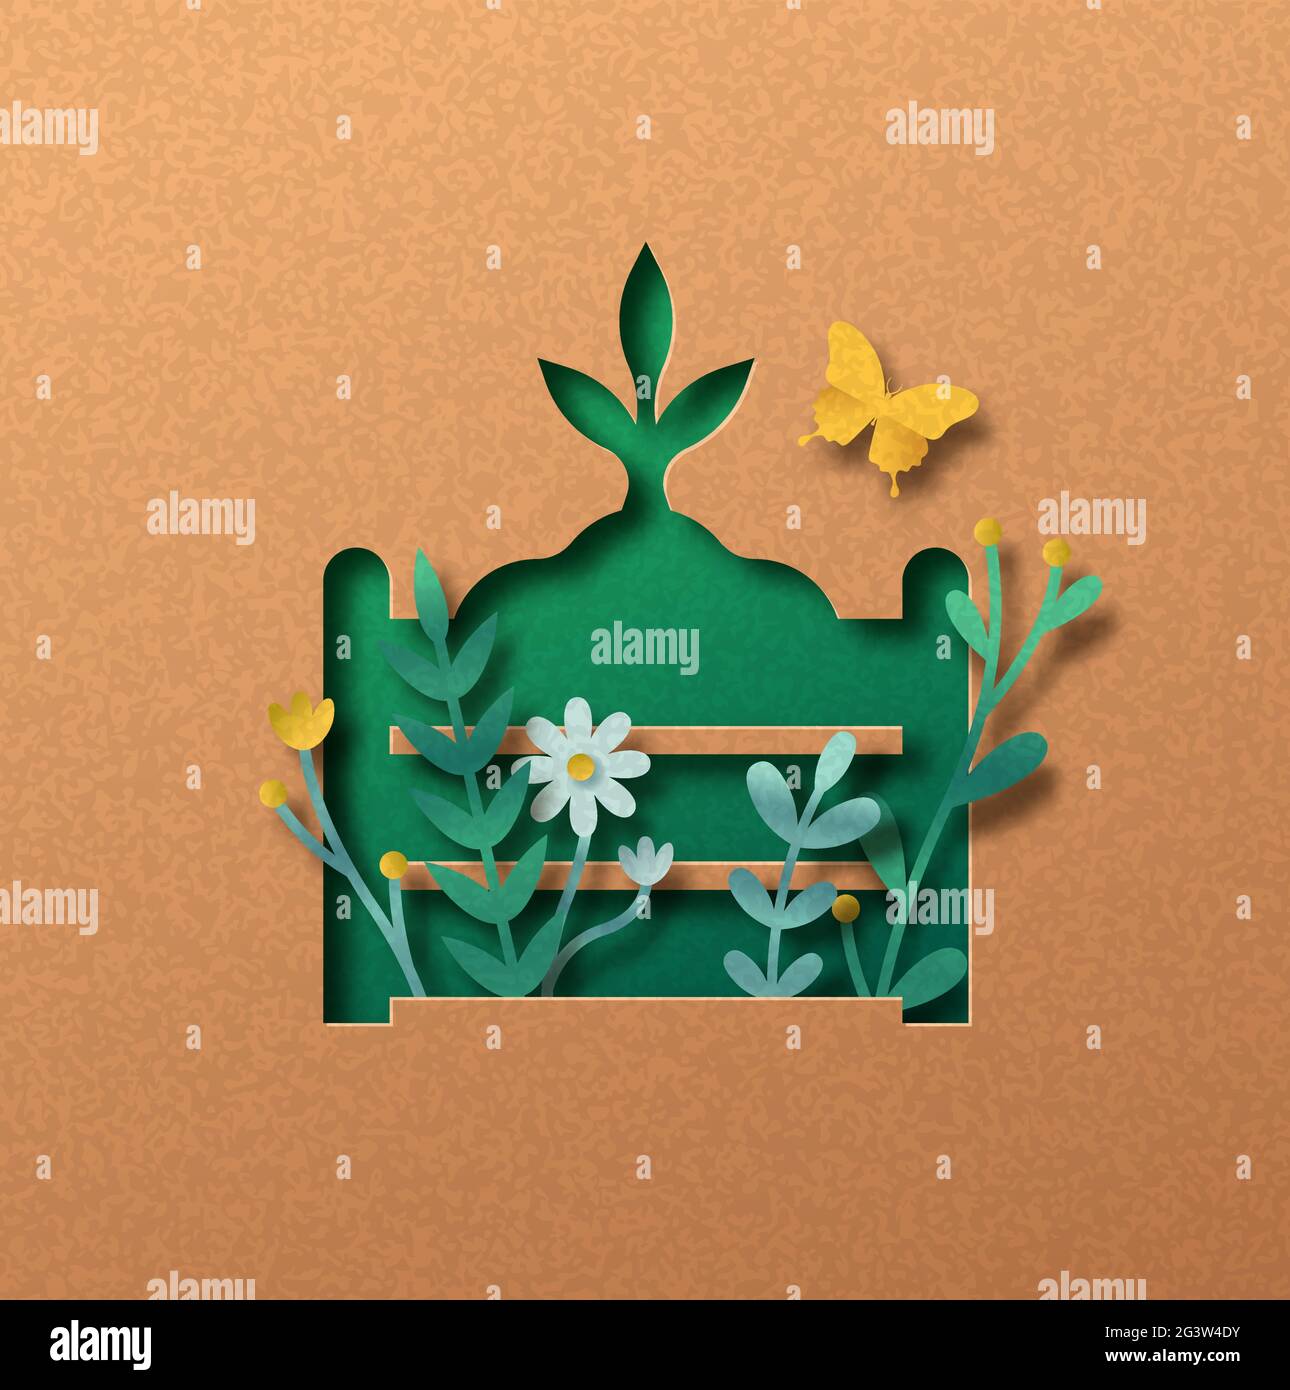 Kompostierung papercut Illustration Konzept mit grünen Pflanzenblatt und Gartenblumen. 3D-Kompost-Düngemittel Ausschnitt Handwerk Design aus recyceltem Papier Backgro Stock Vektor